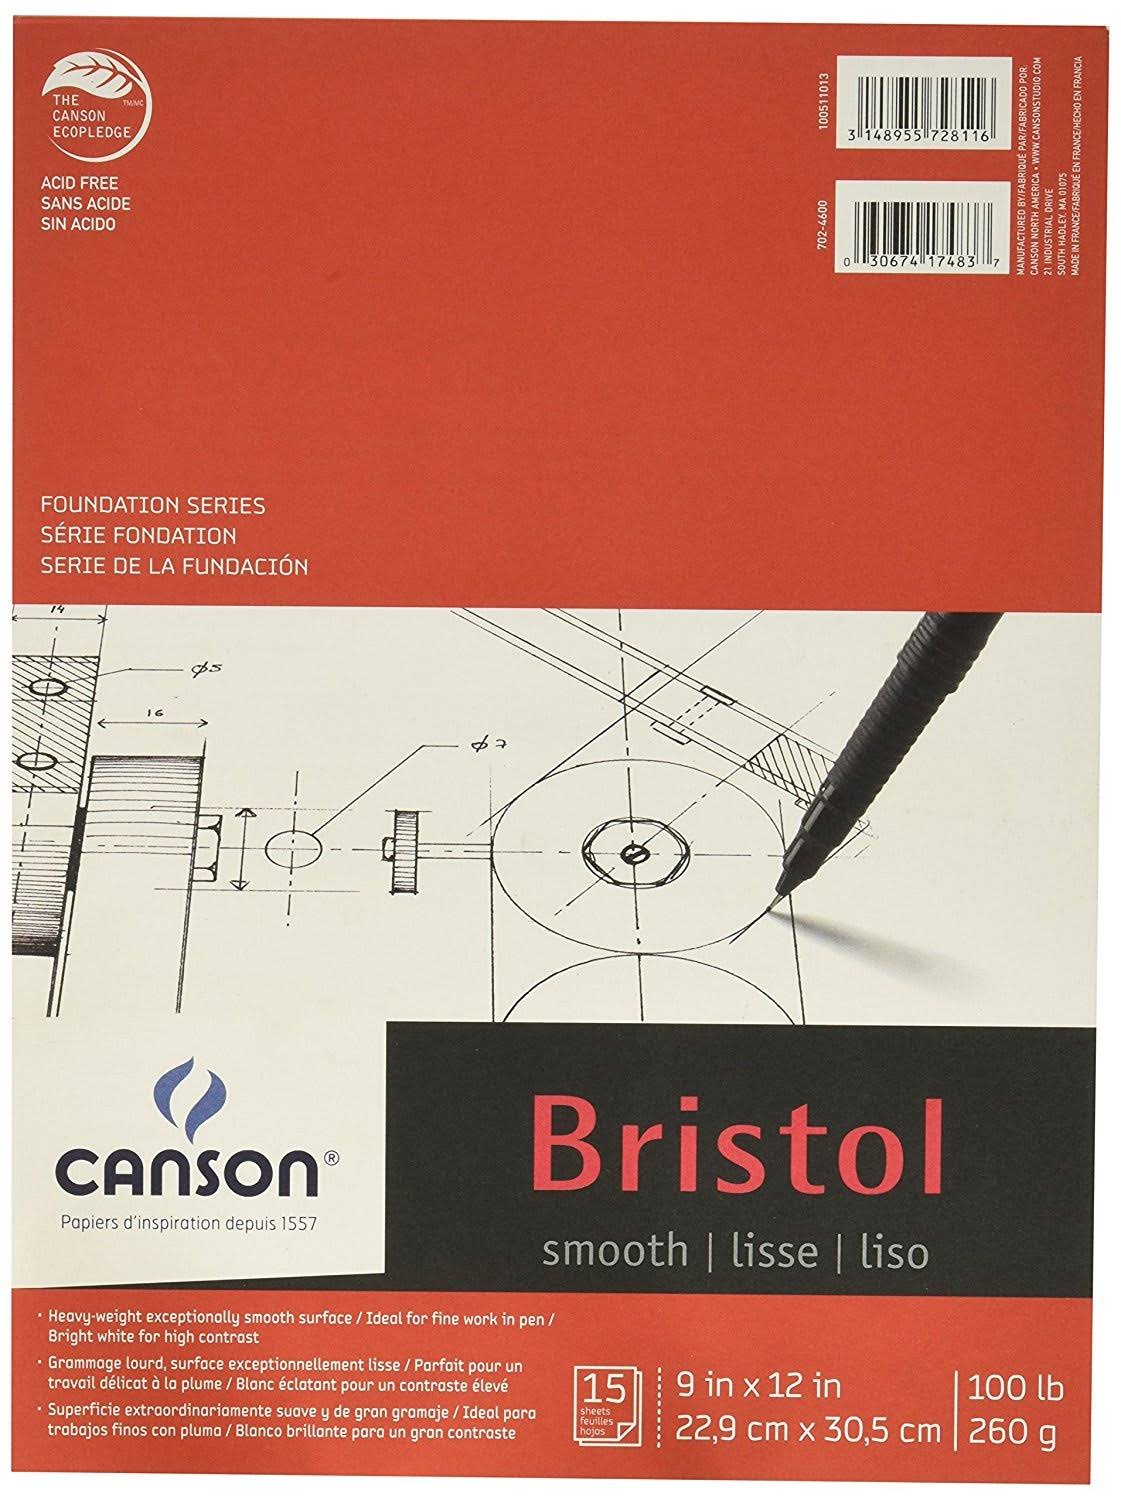 Canson Foundation Bristol Pad - Smooth, 11"x14"